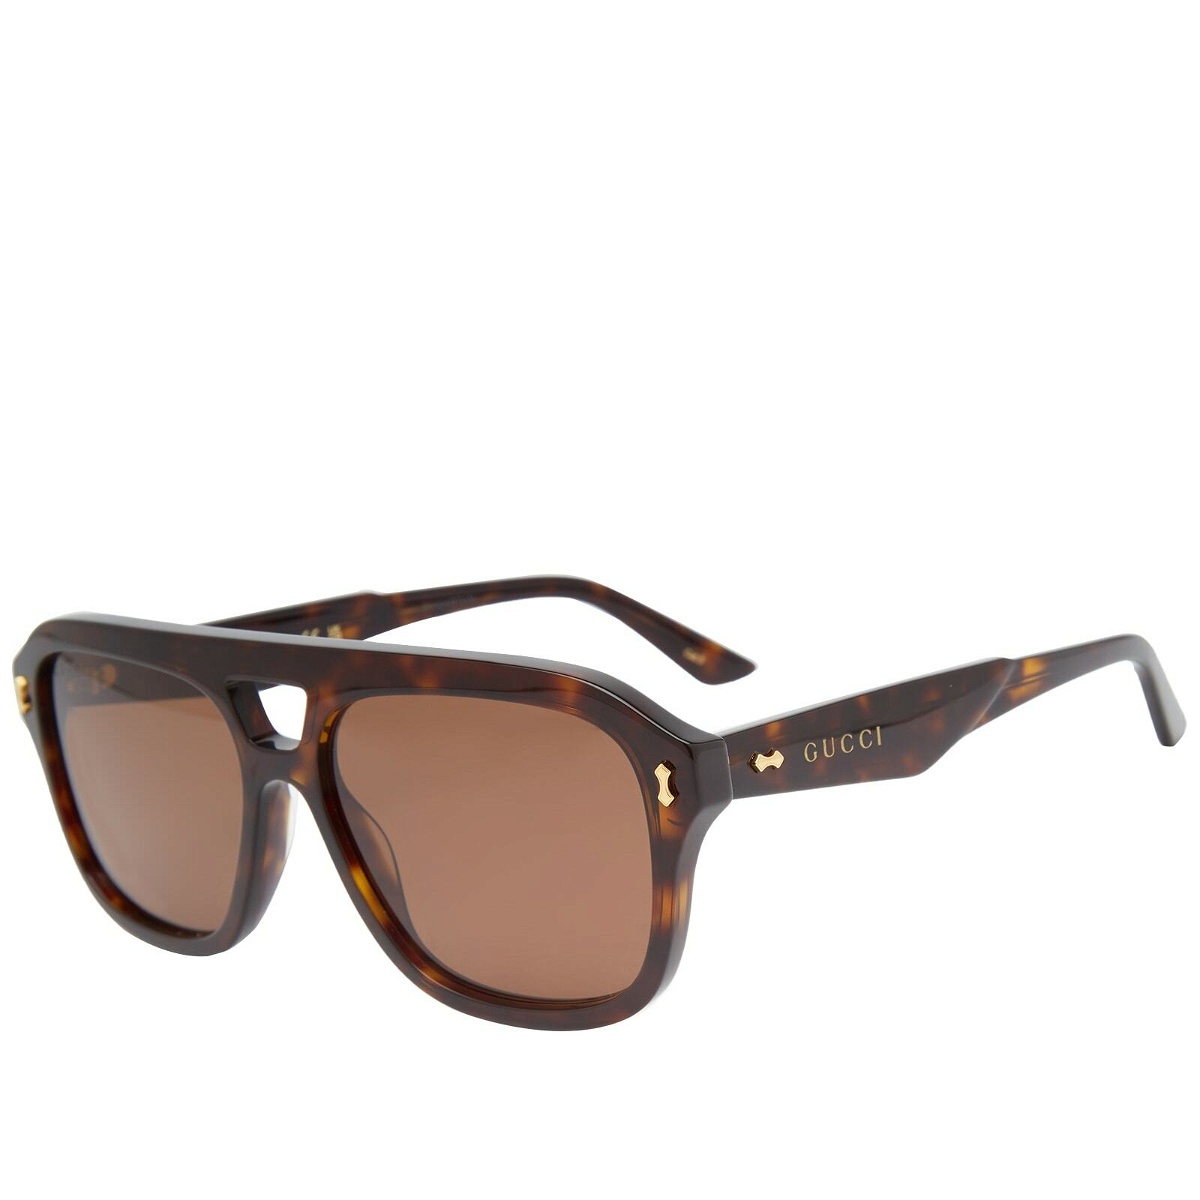 Gucci Men's Eyewear GG1263S Sunglasses in Havana/Brown Gucci